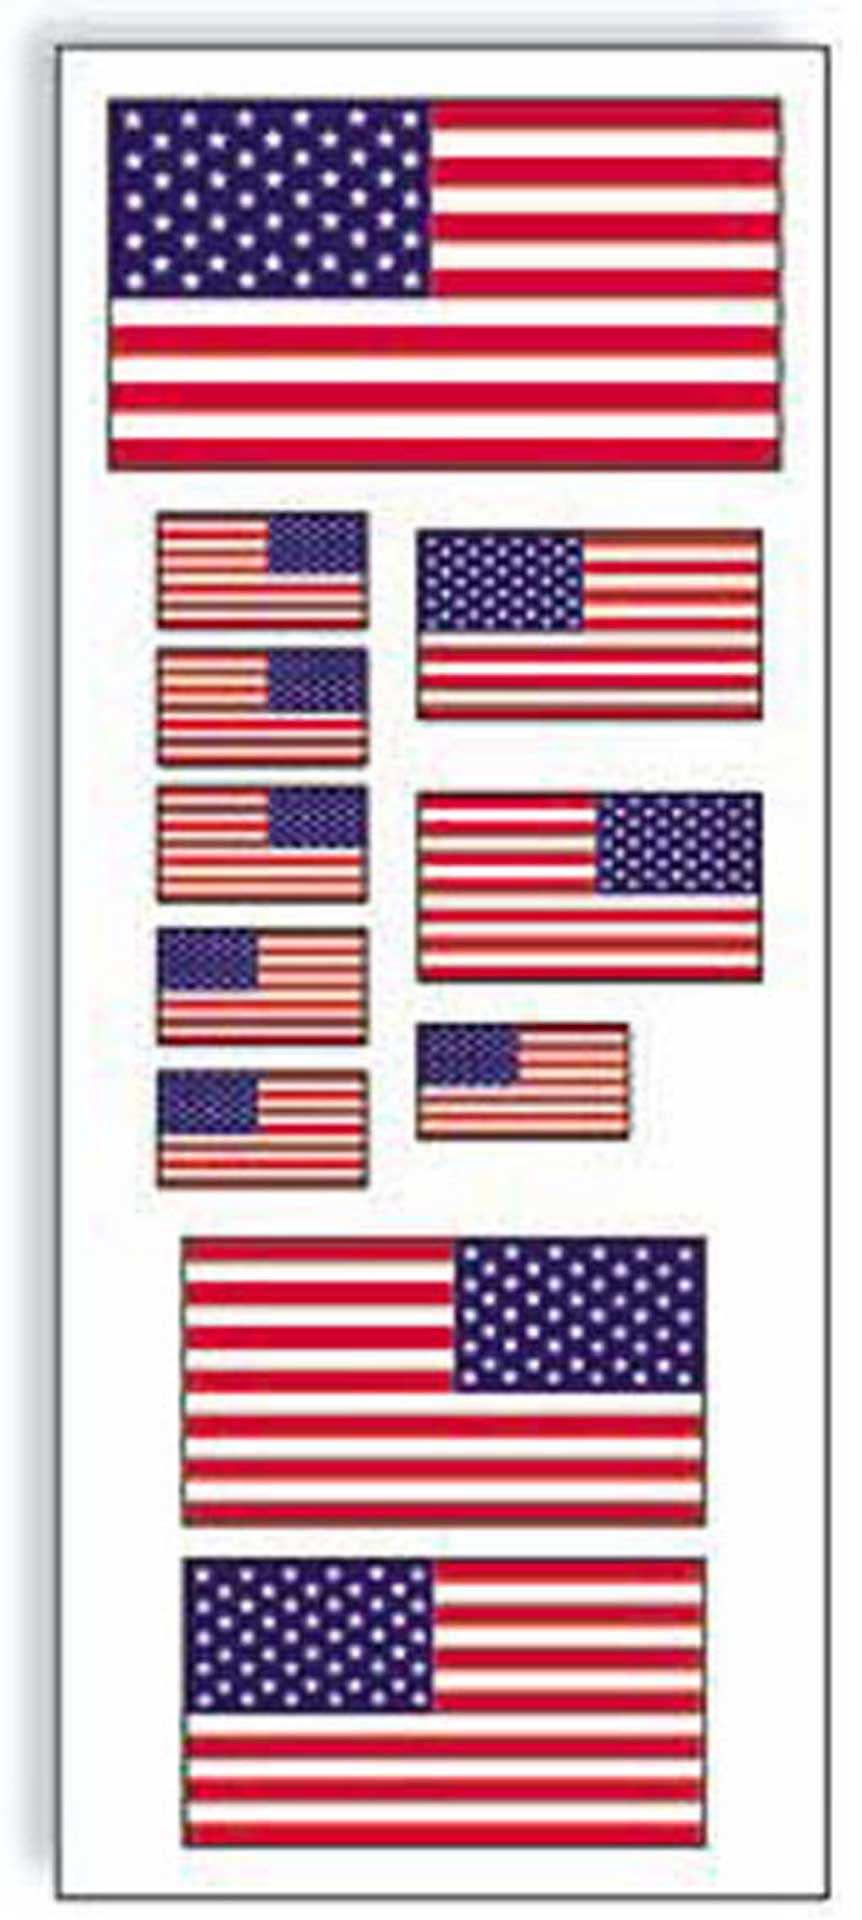 SIG AUTOCOLLANT AMERICAN FLAG 1,2,3"